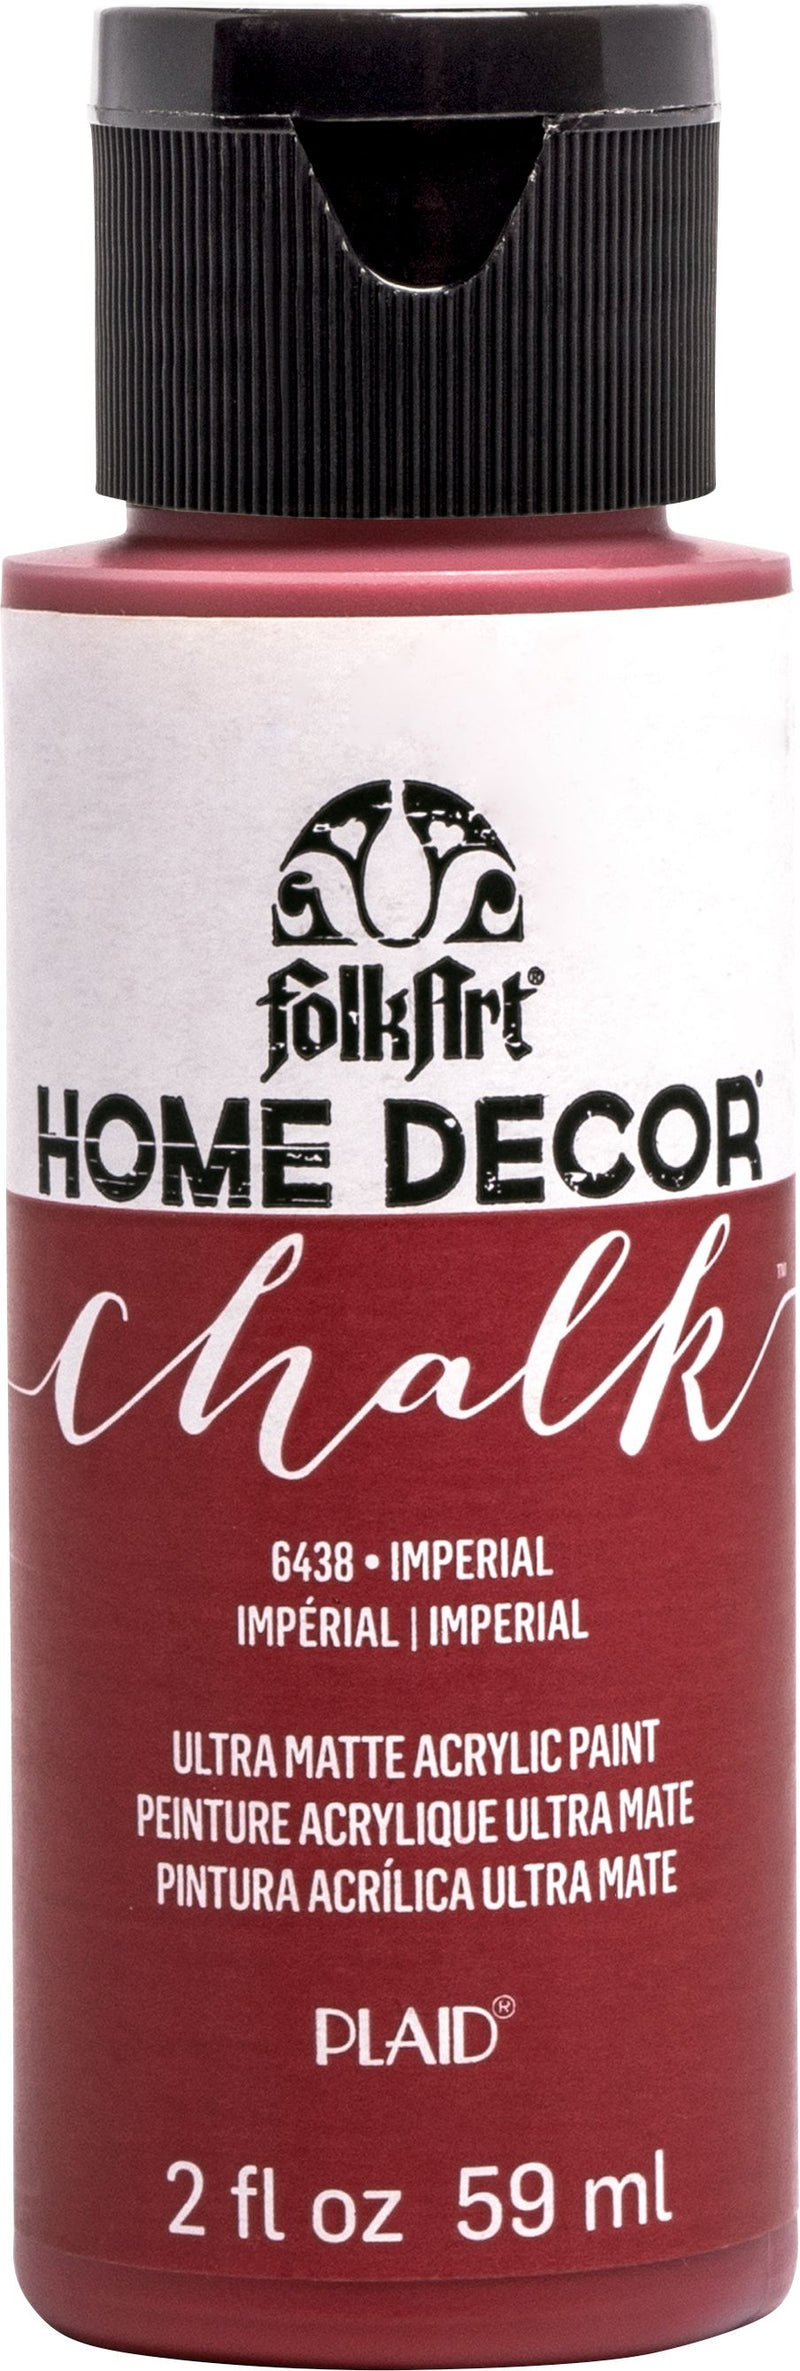 Folk Art Home Decor Chalk Acrylic Paint 2oz/59ml